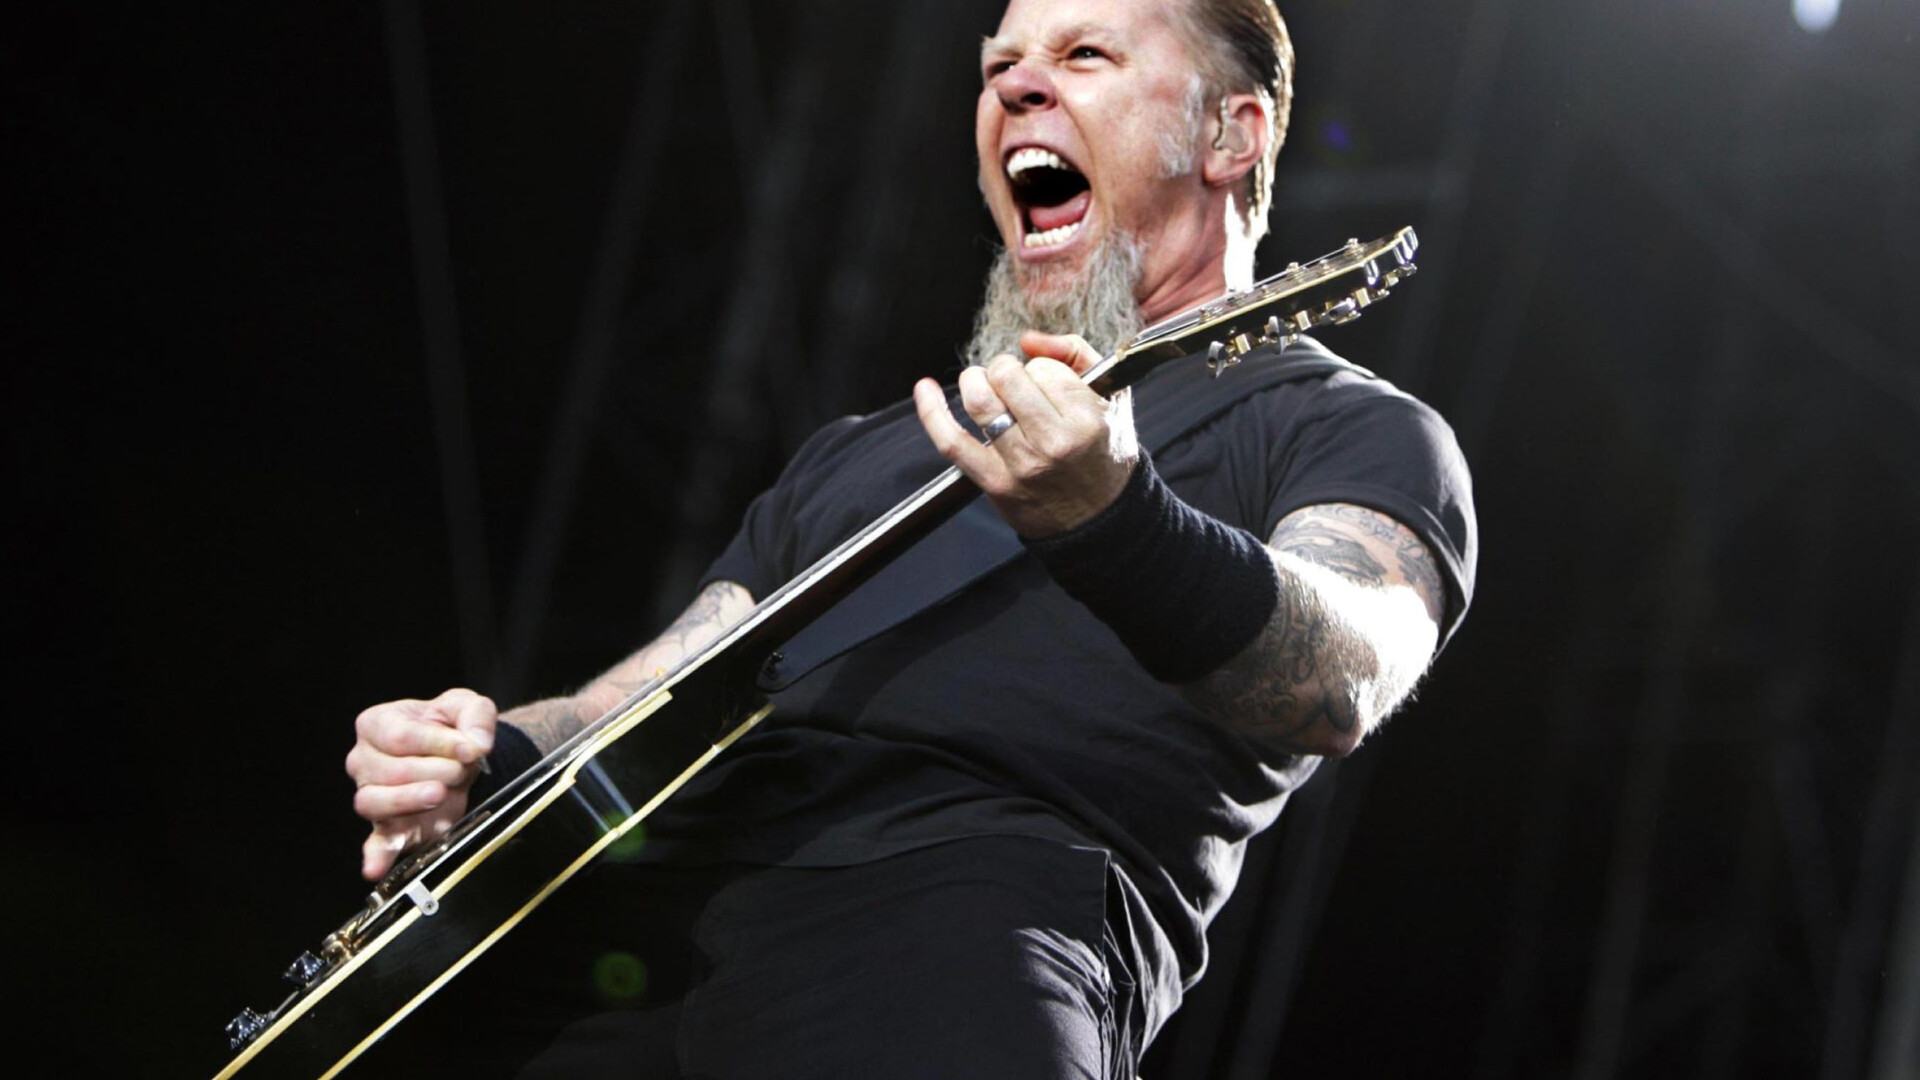 Noul album Metallica poate fi si cumparat, nu doar piratat!